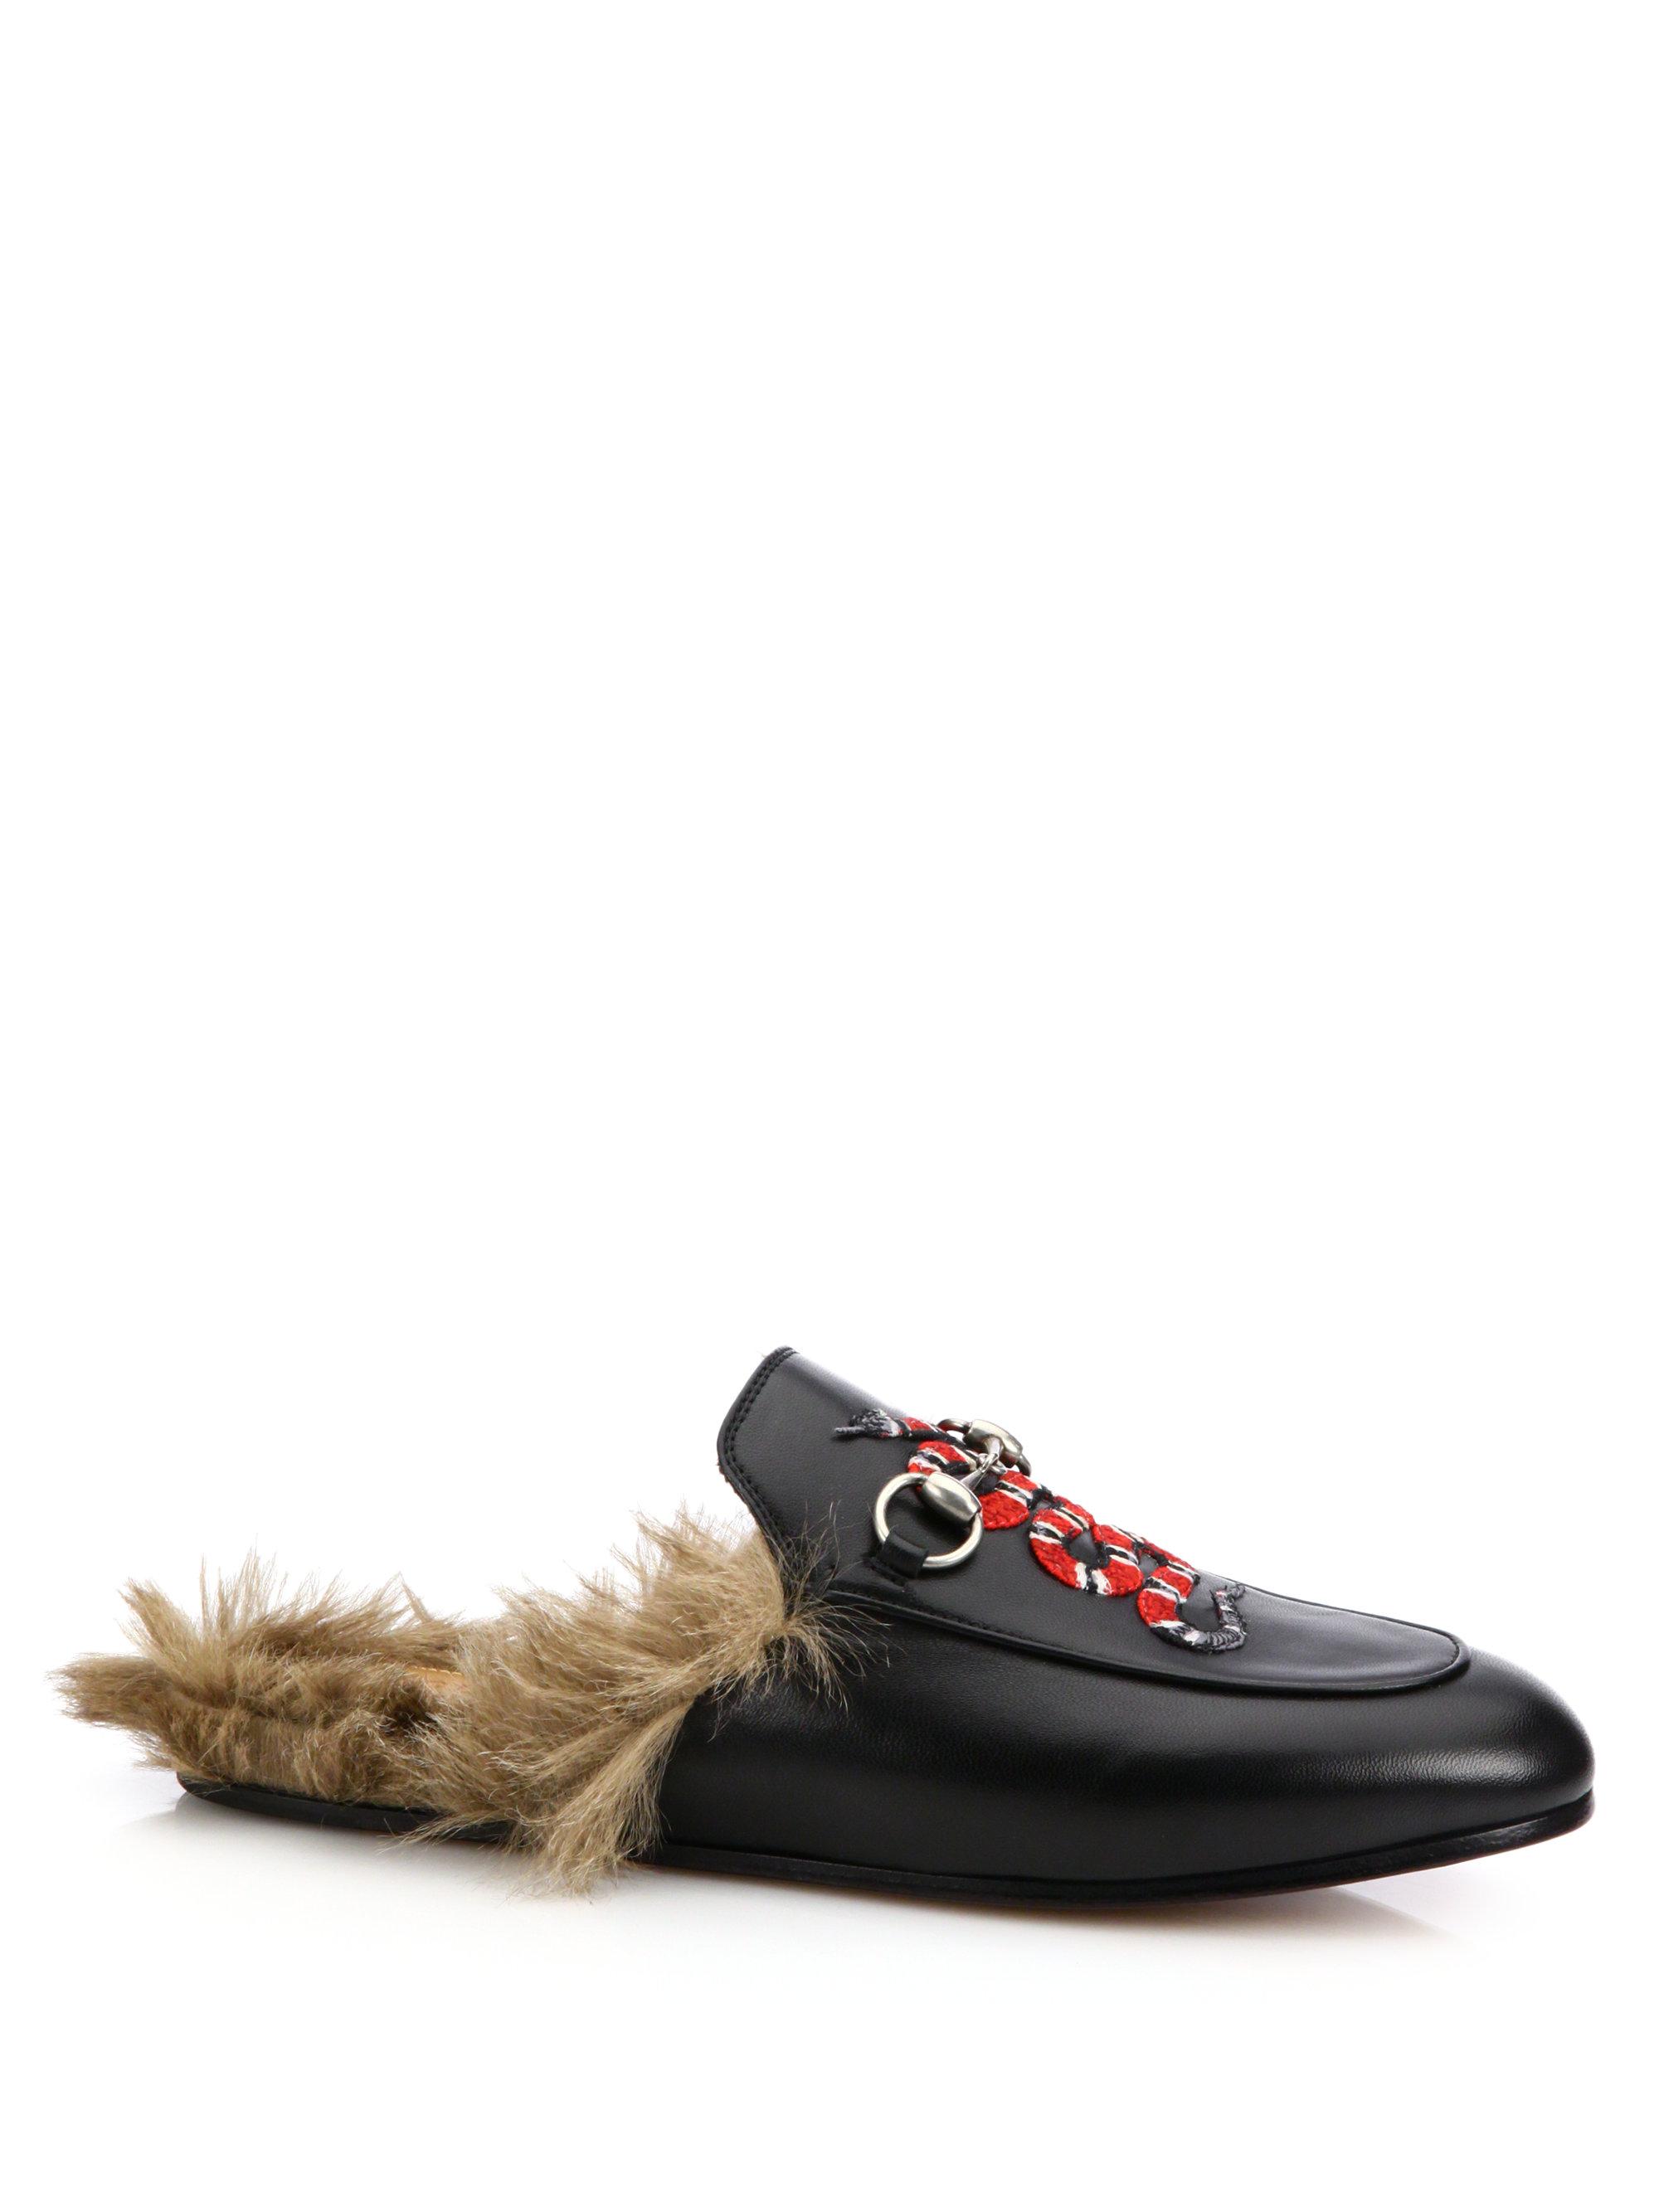 Imitatie Margaret Mitchell Industrialiseren Gucci Princetown Fur-lined Snake Leather Slippers in Black | Lyst